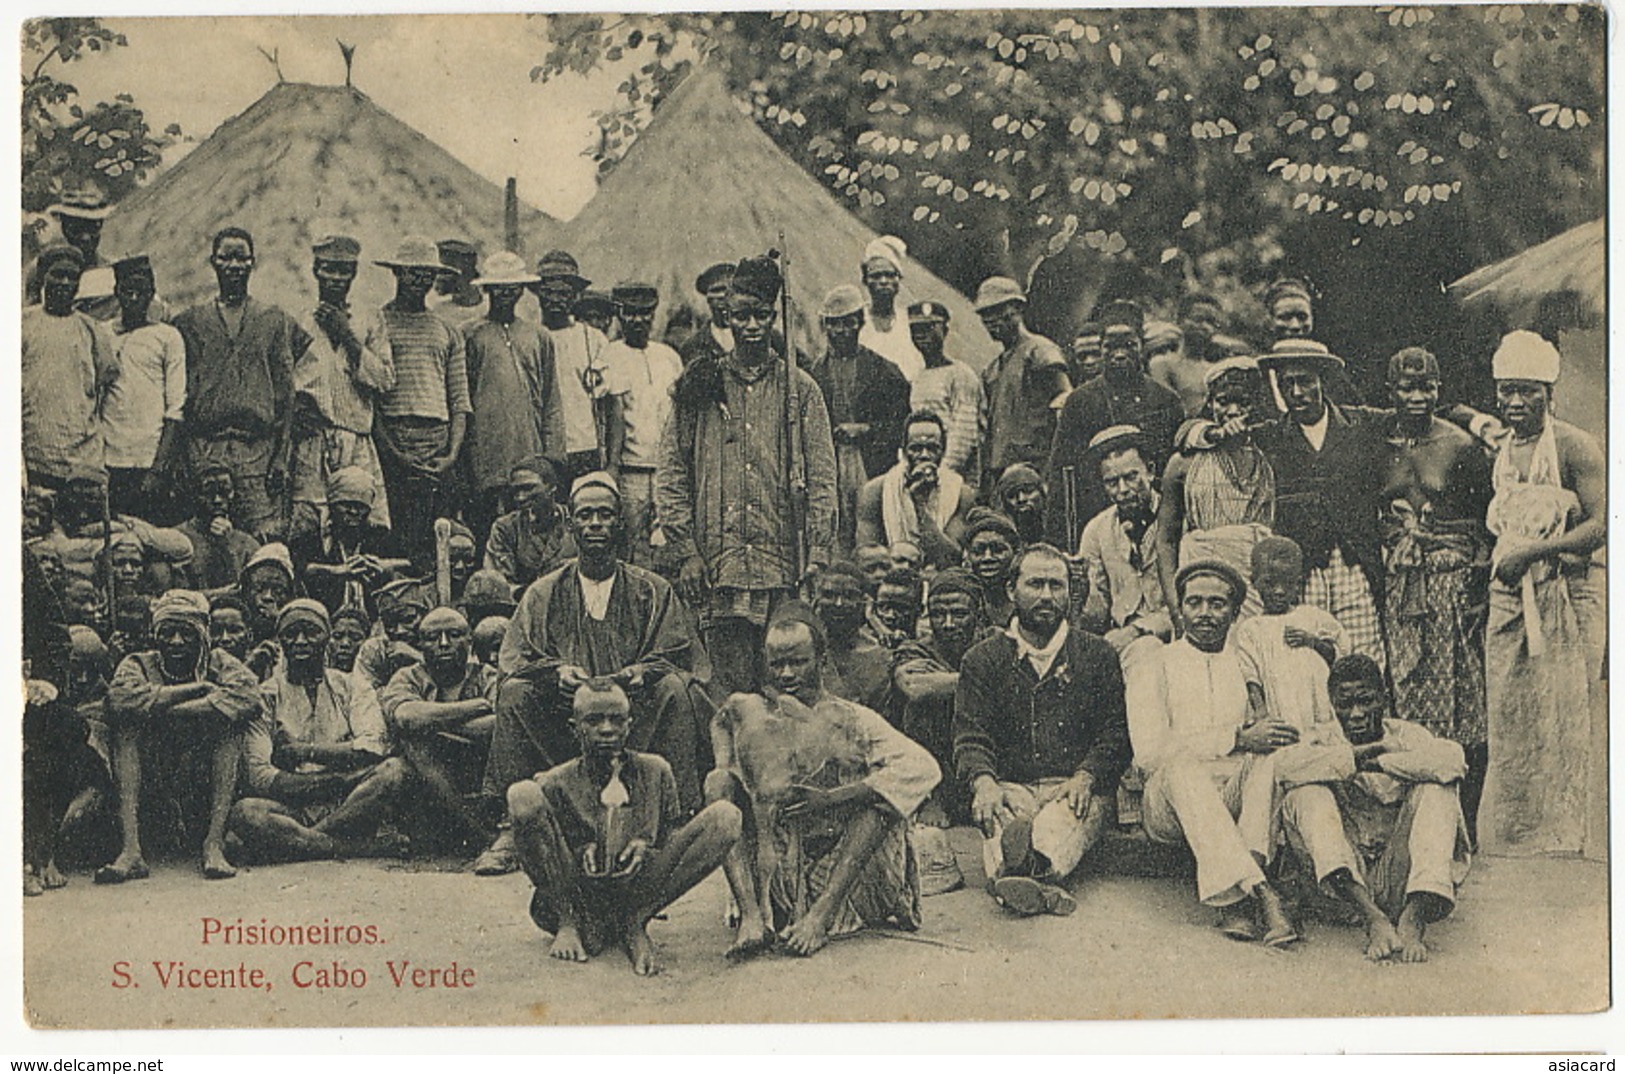 S. Vicente Cabo Verde Prisioneiros  Prisoners - Capo Verde